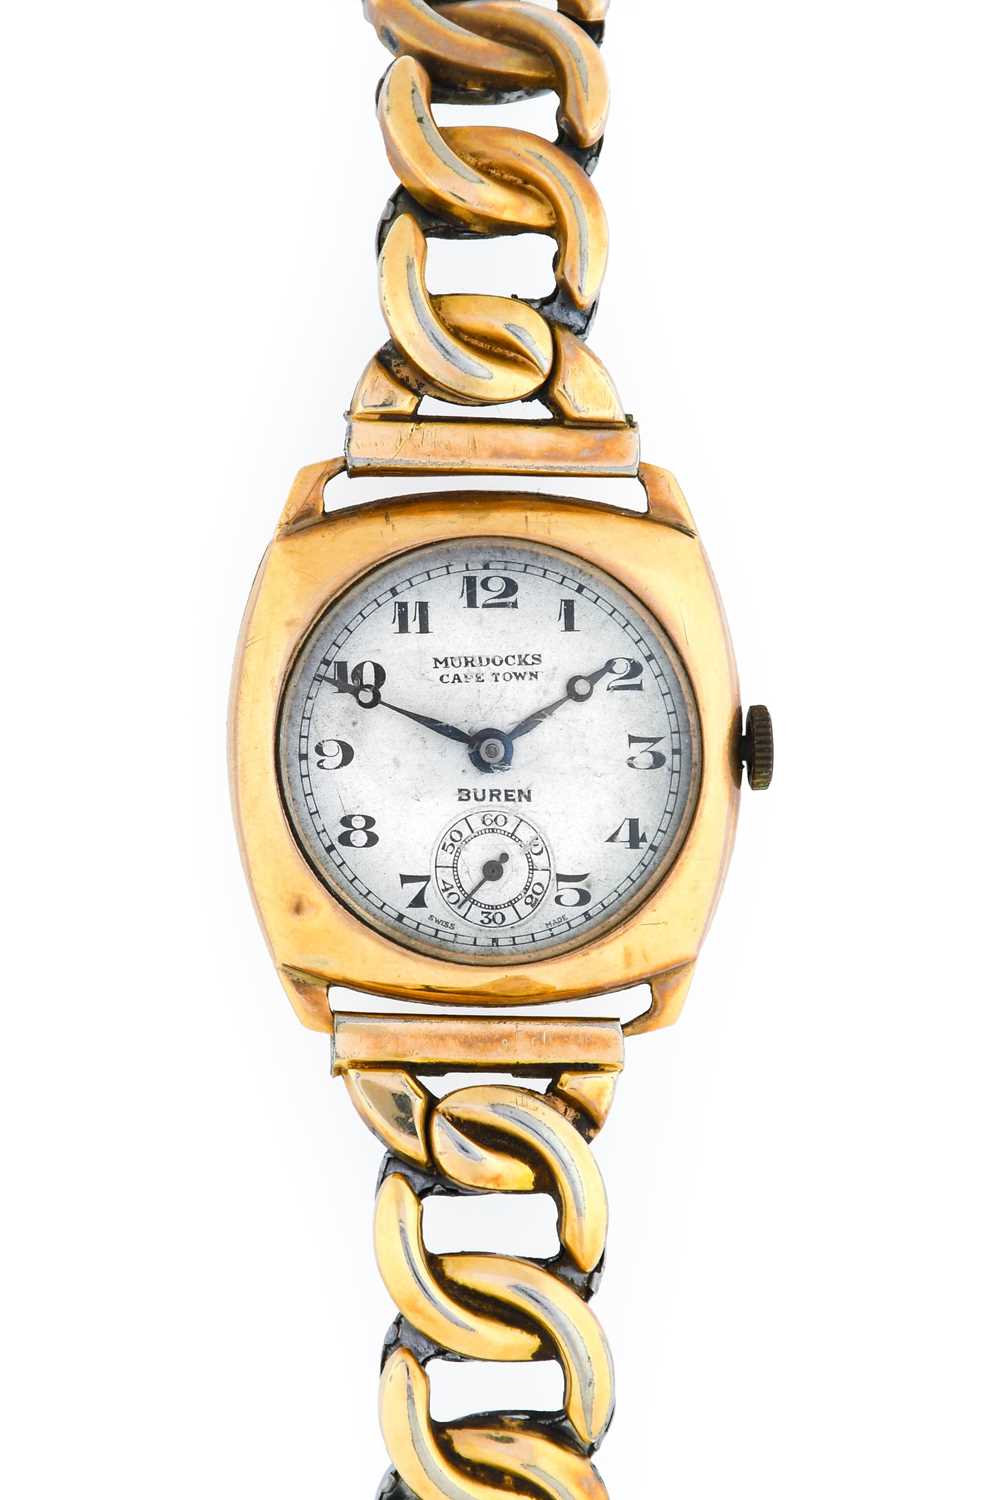 Buren: An Interesting 9 Carat Gold Presentation Wristwatch Together with an Appreciation Autograph